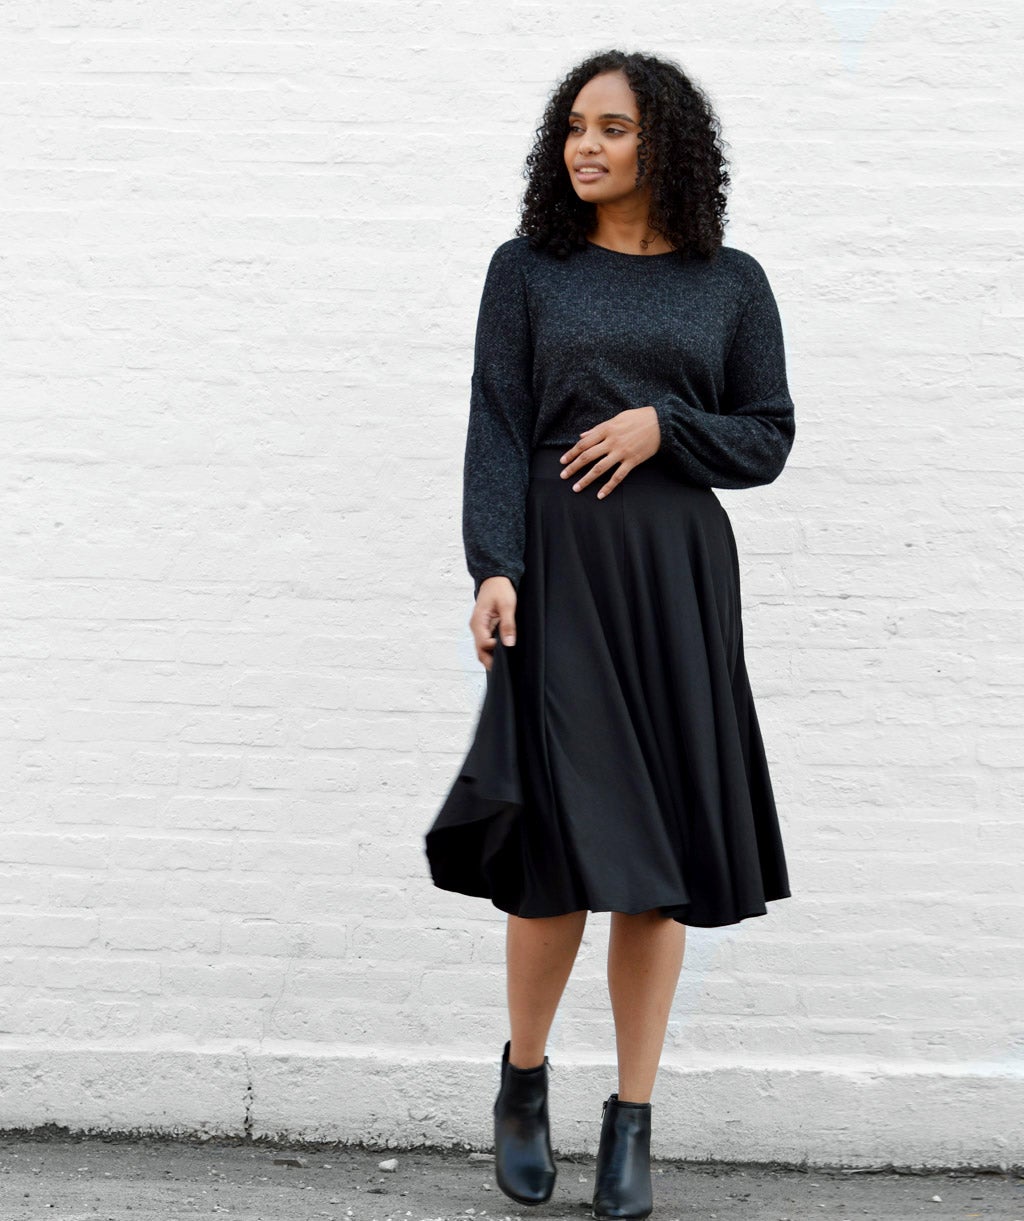 ALIYAH skirt in Black